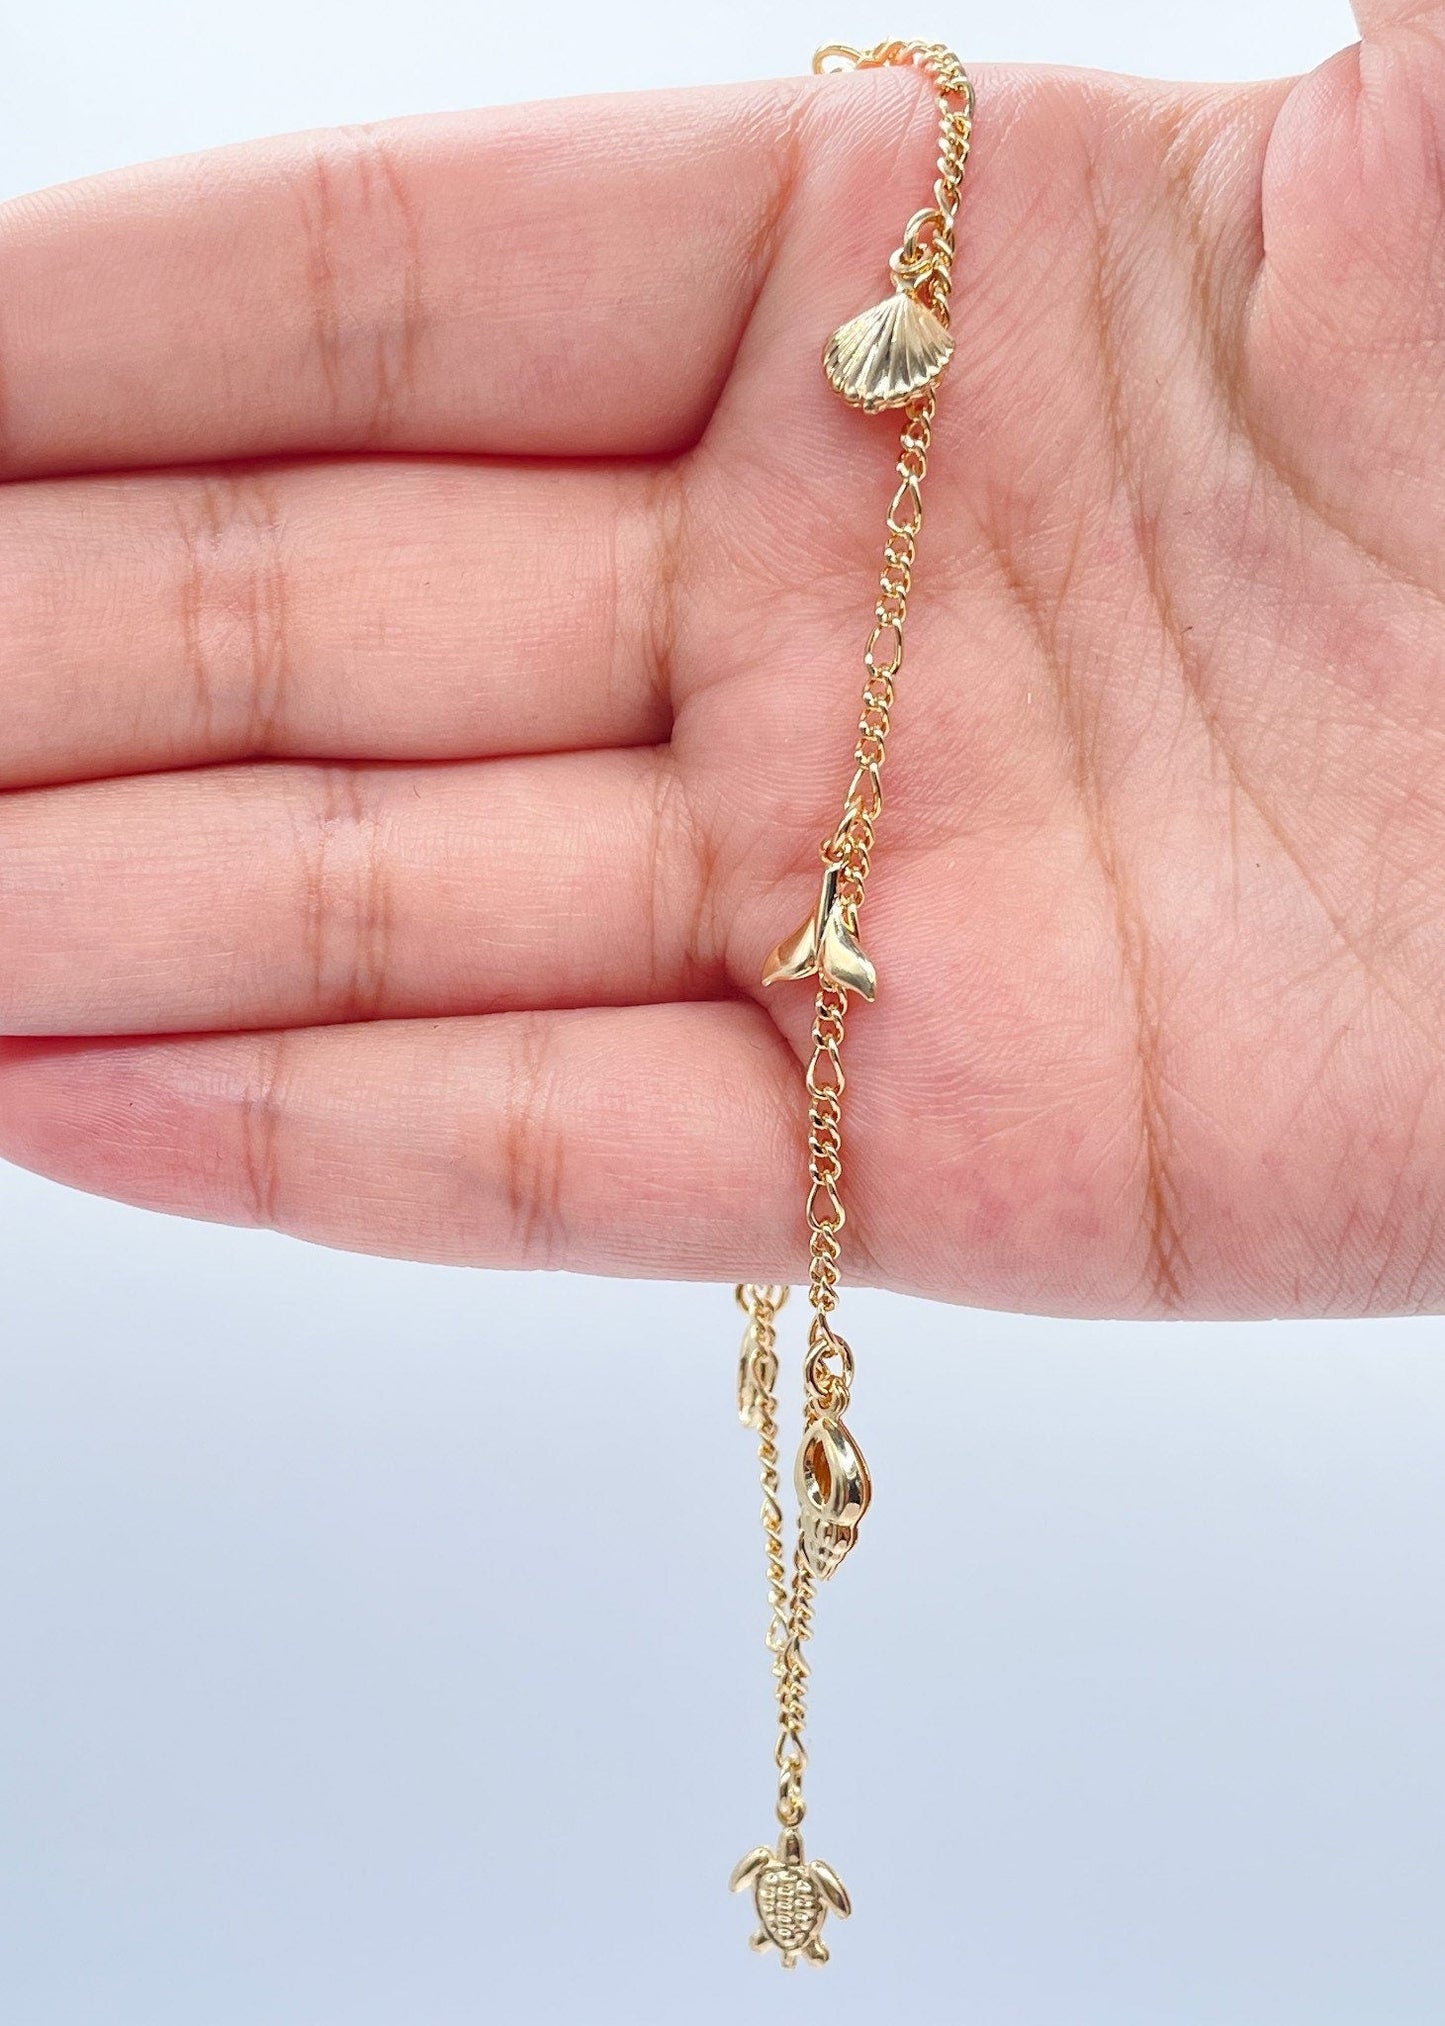 18k Gold Layered Oceanic Inspired Charm Anklet